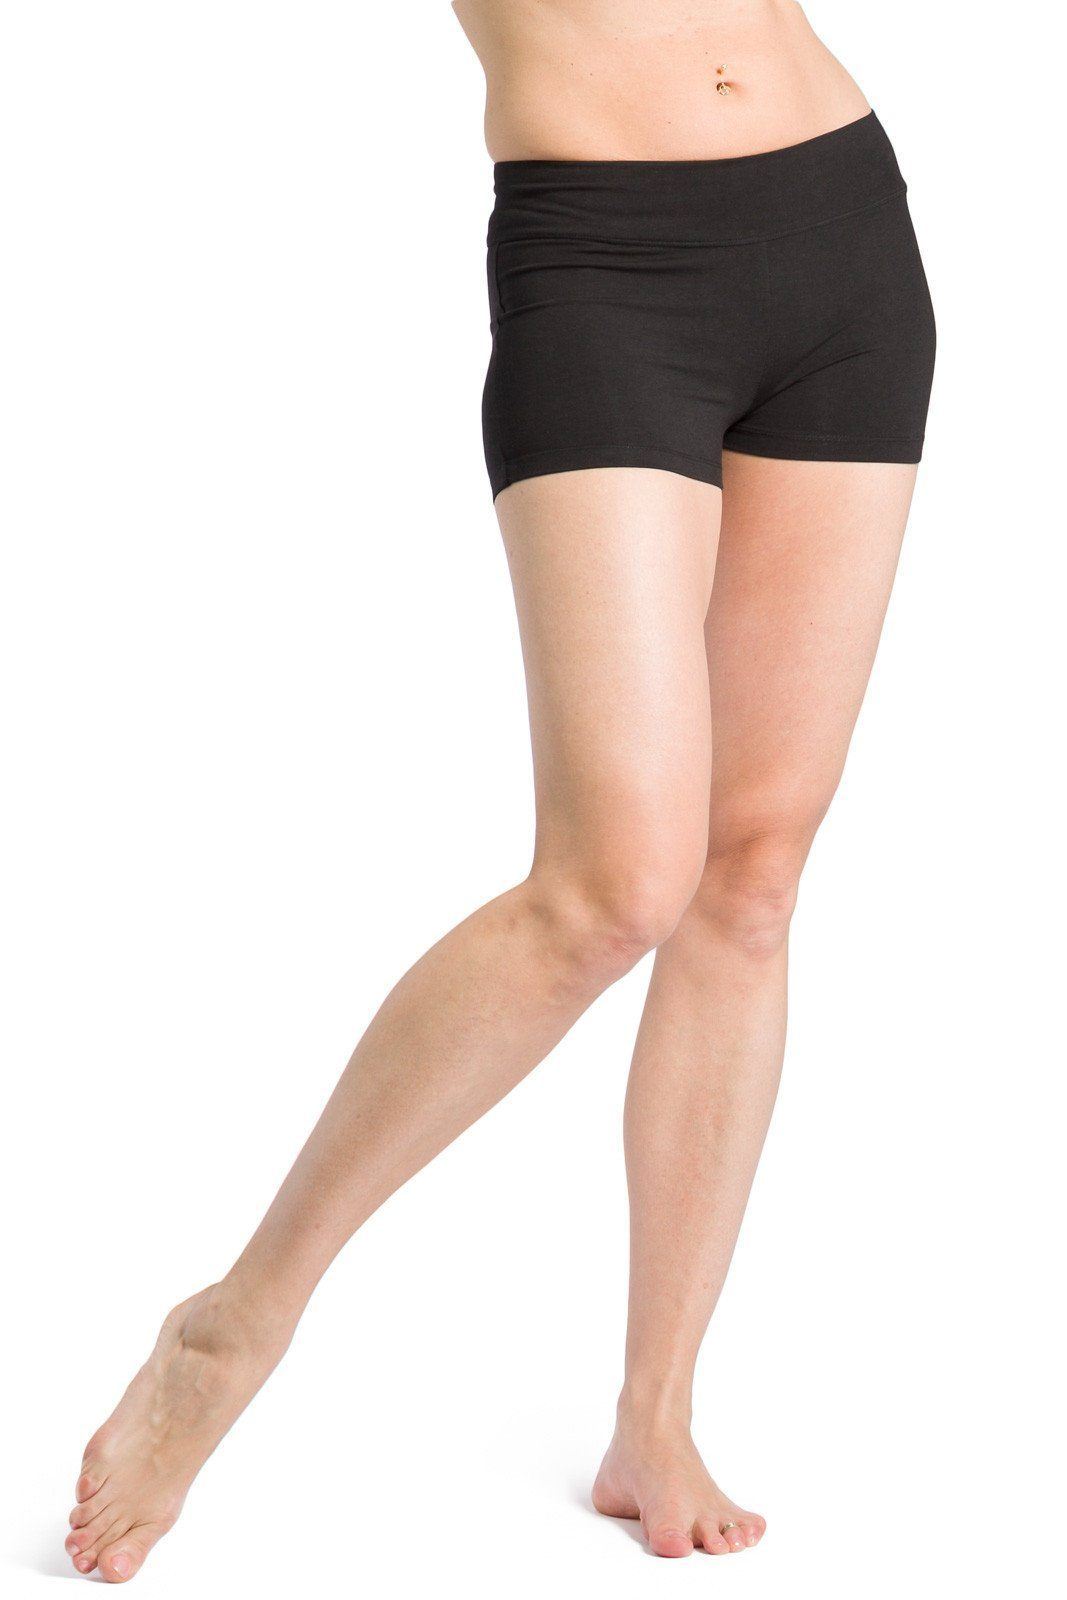 Buy the NWT Womens Moana Hybrid Activewear Fishing Athletic Shorts